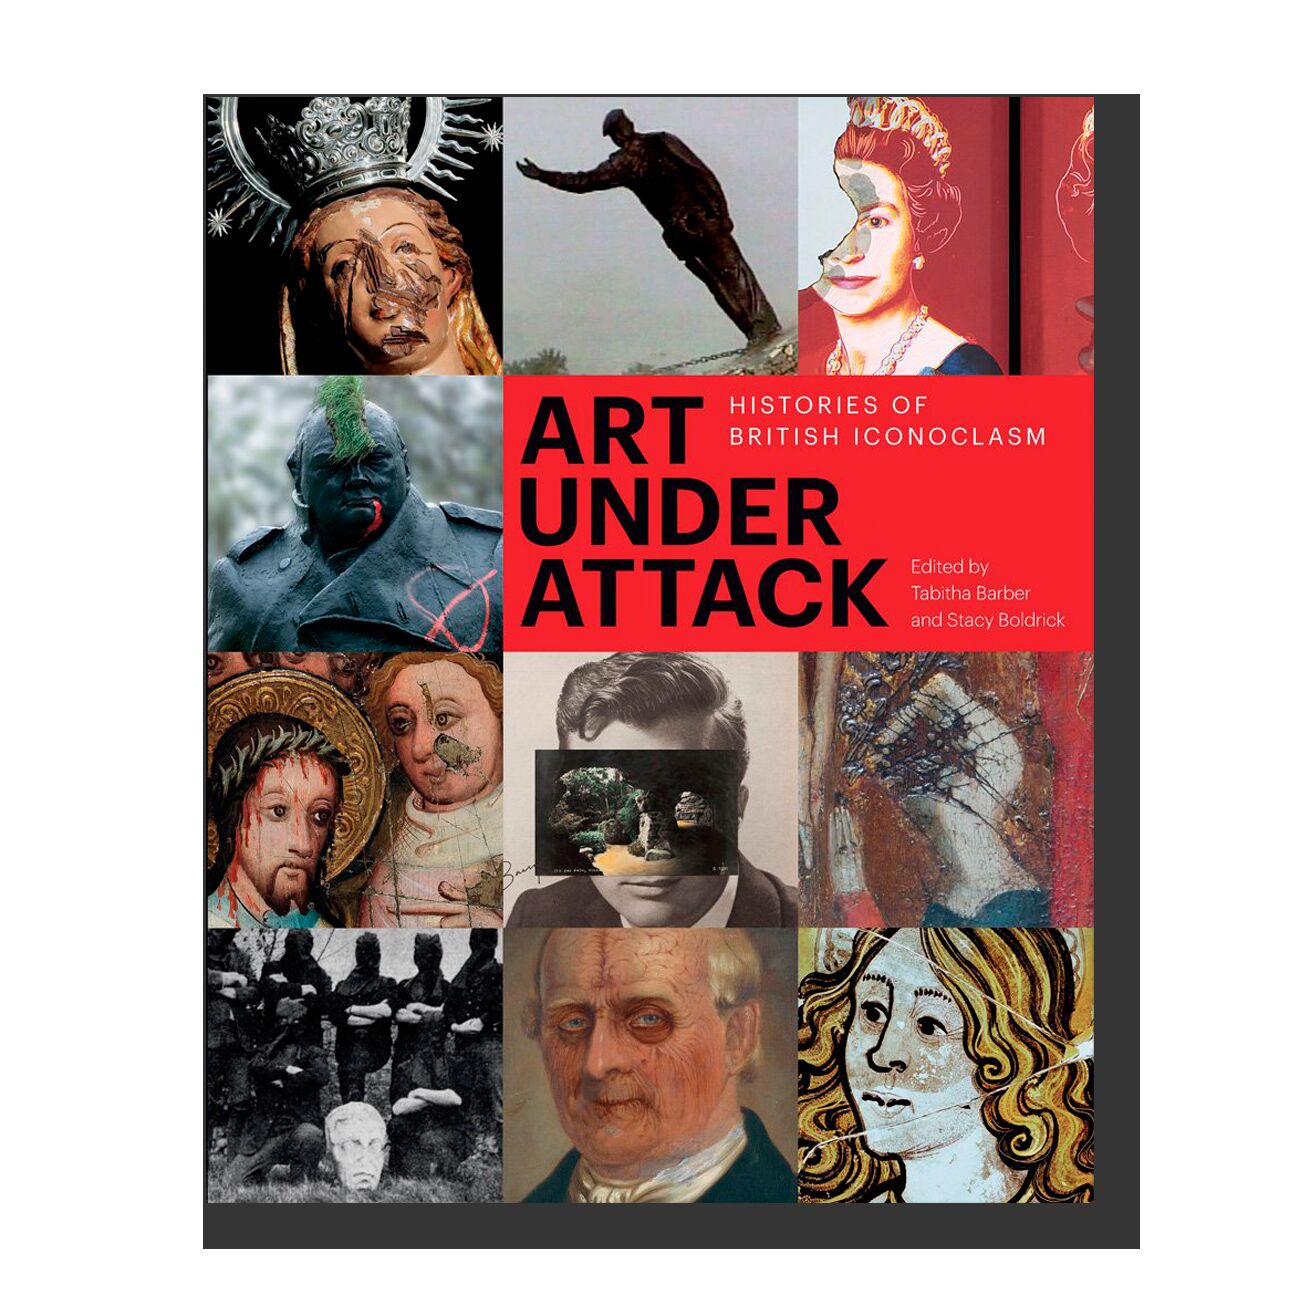 Art Under Attack: Histories of British Iconoclasm